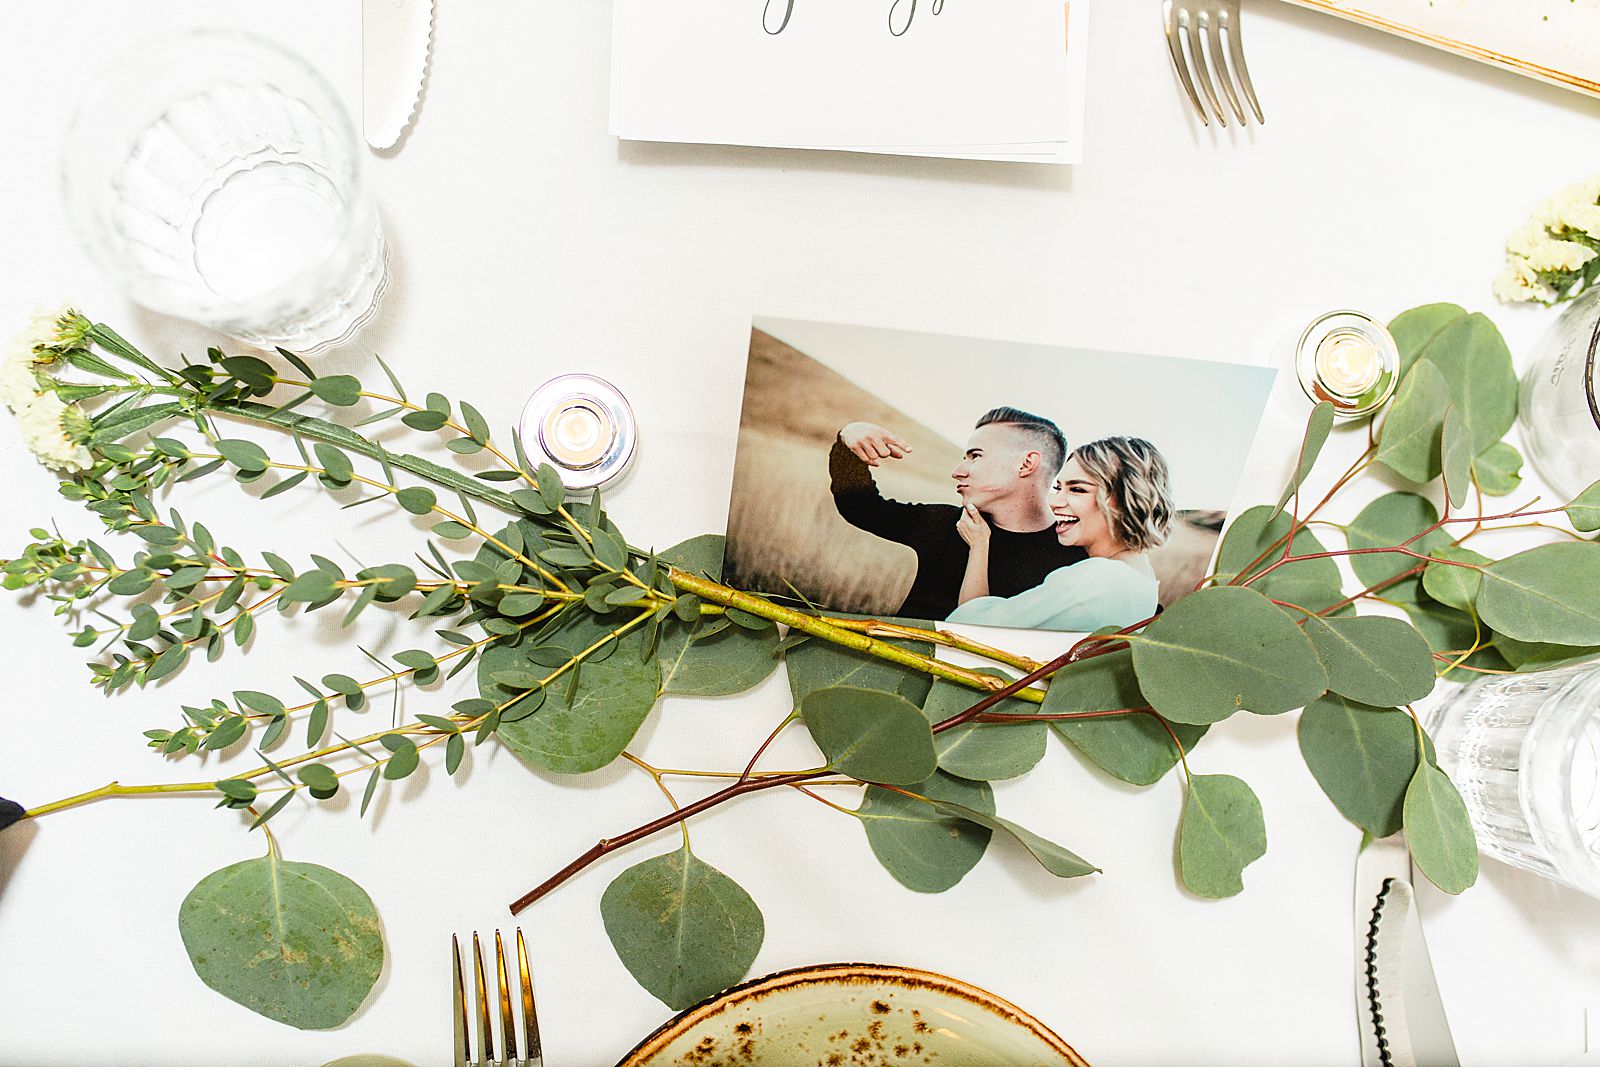 Reception Details | Wedding Dinner Details | Wedding Photographer | California Wedding | Newport Beach Wedding Reception